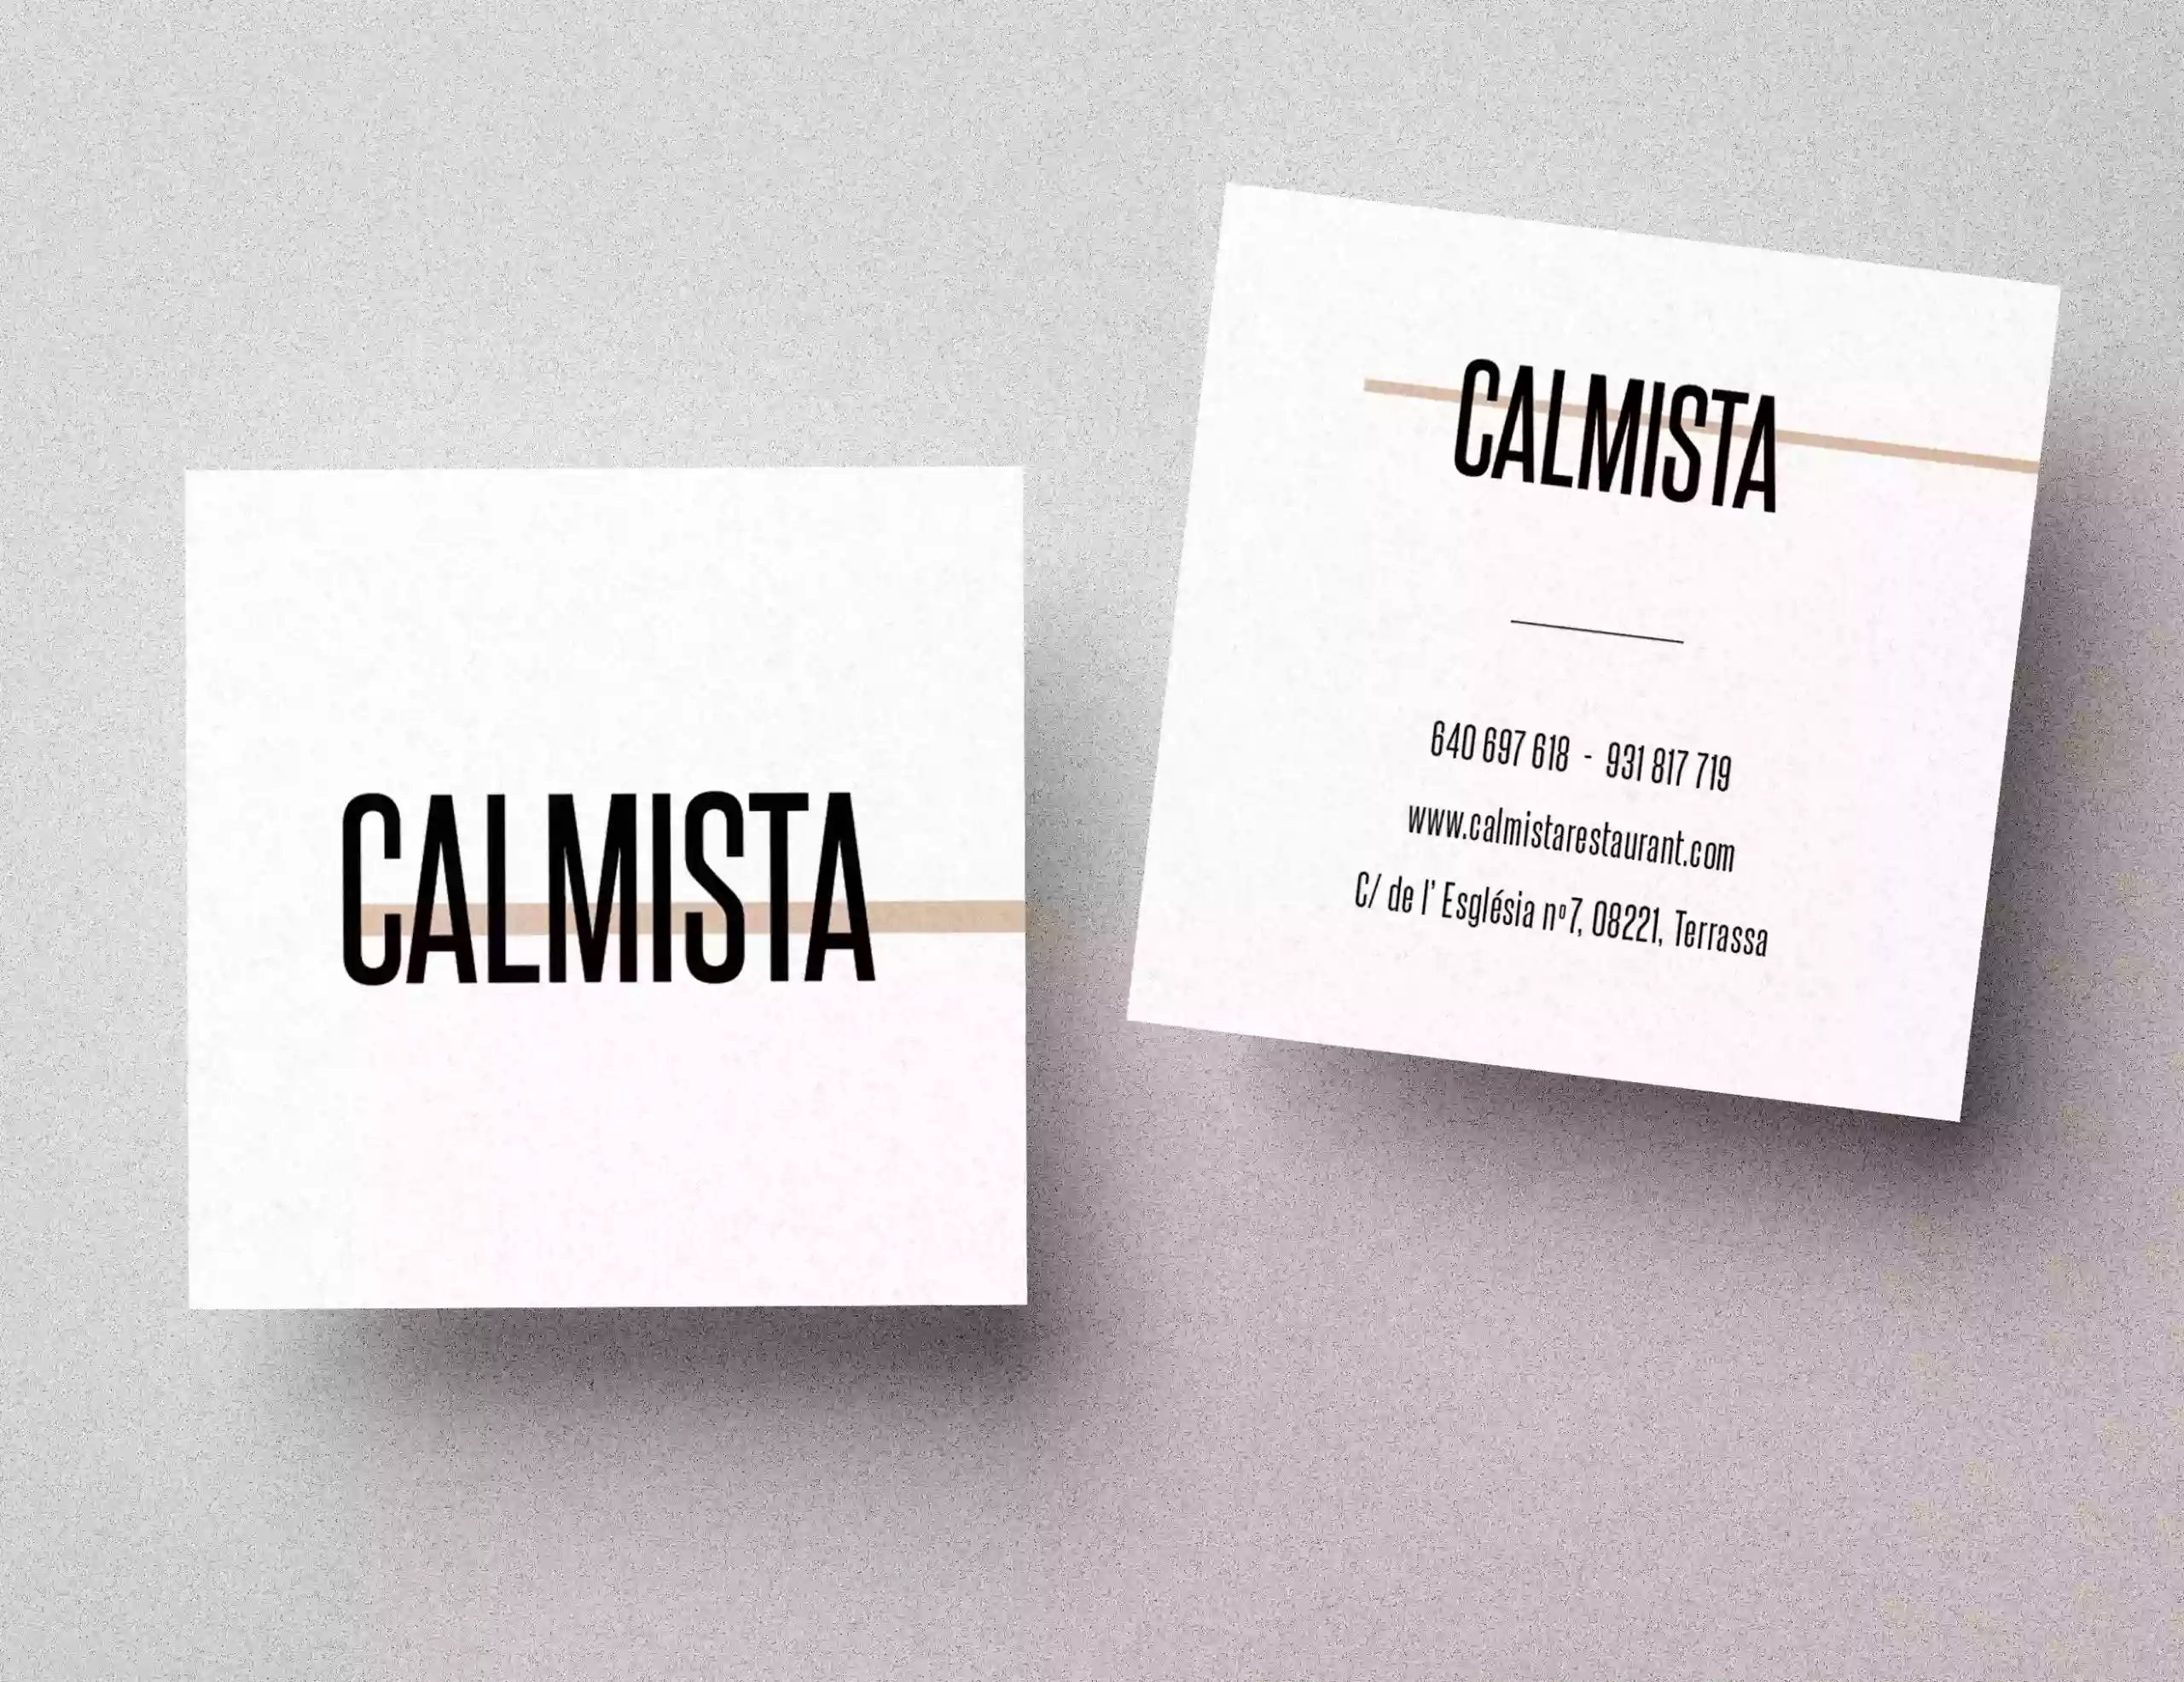 Calmista Restaurant